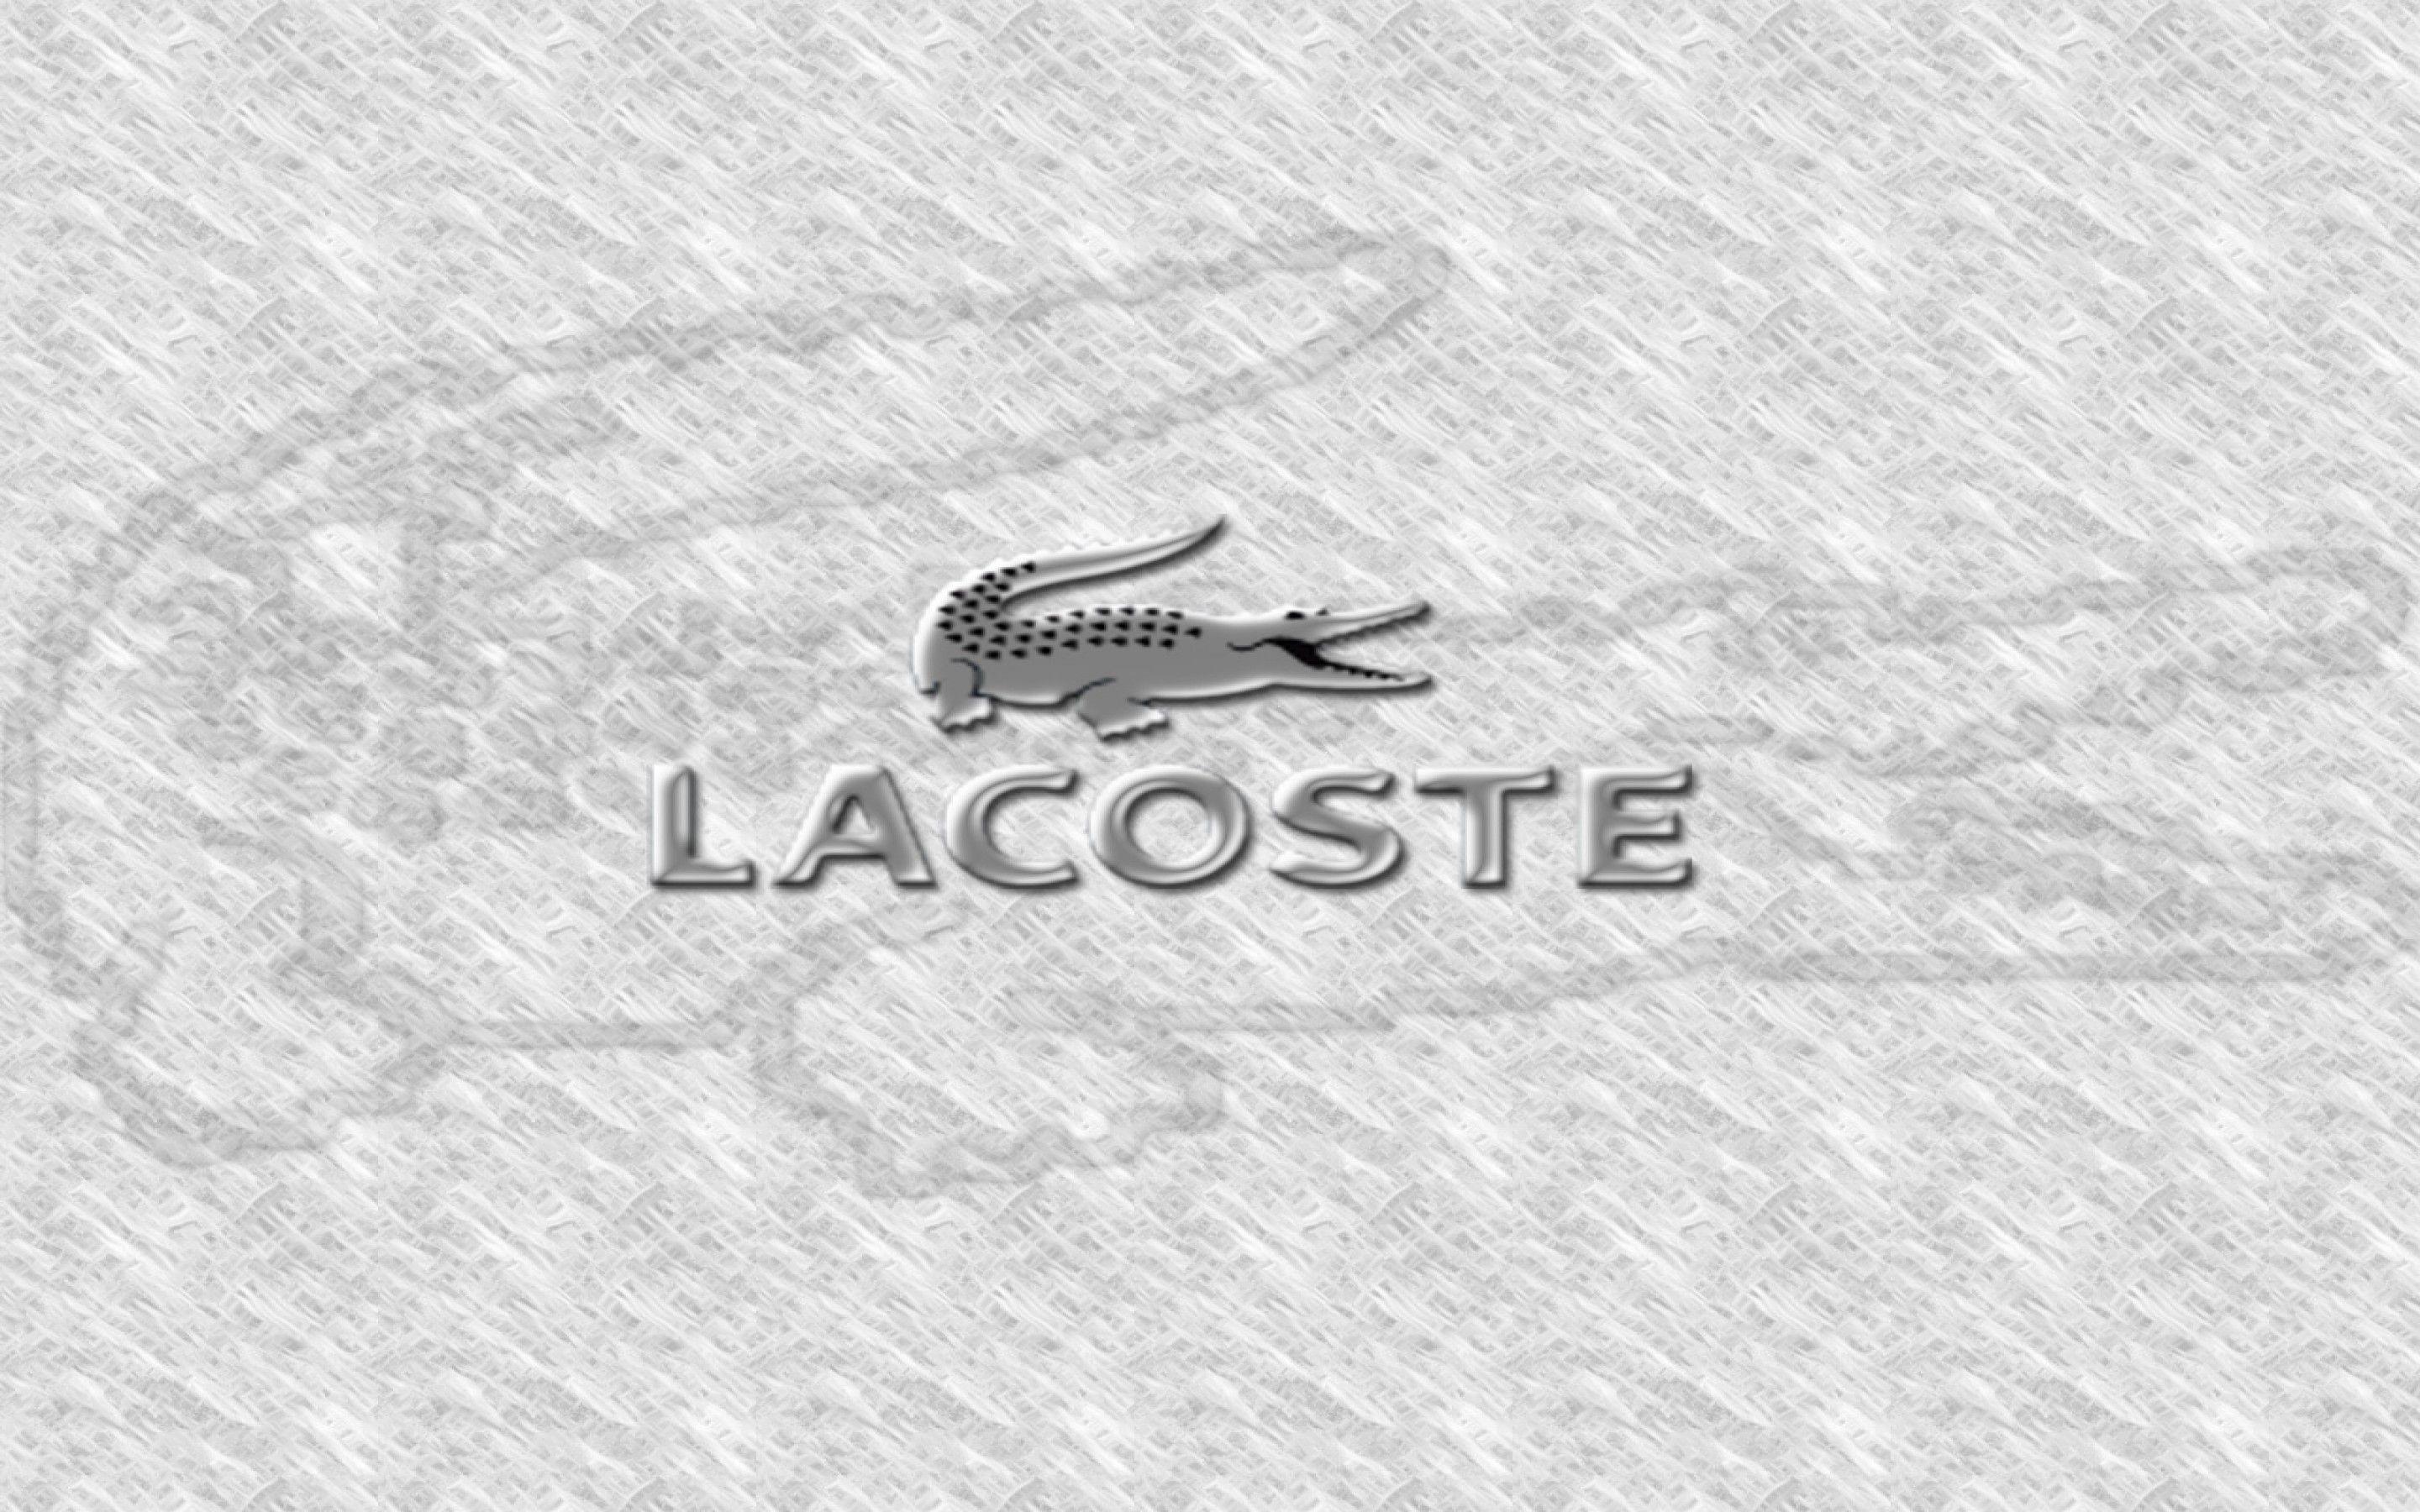 Logo Wallpaper: Lacoste Logo Wallpaper lacoste logo 1280x1024 wallpaper